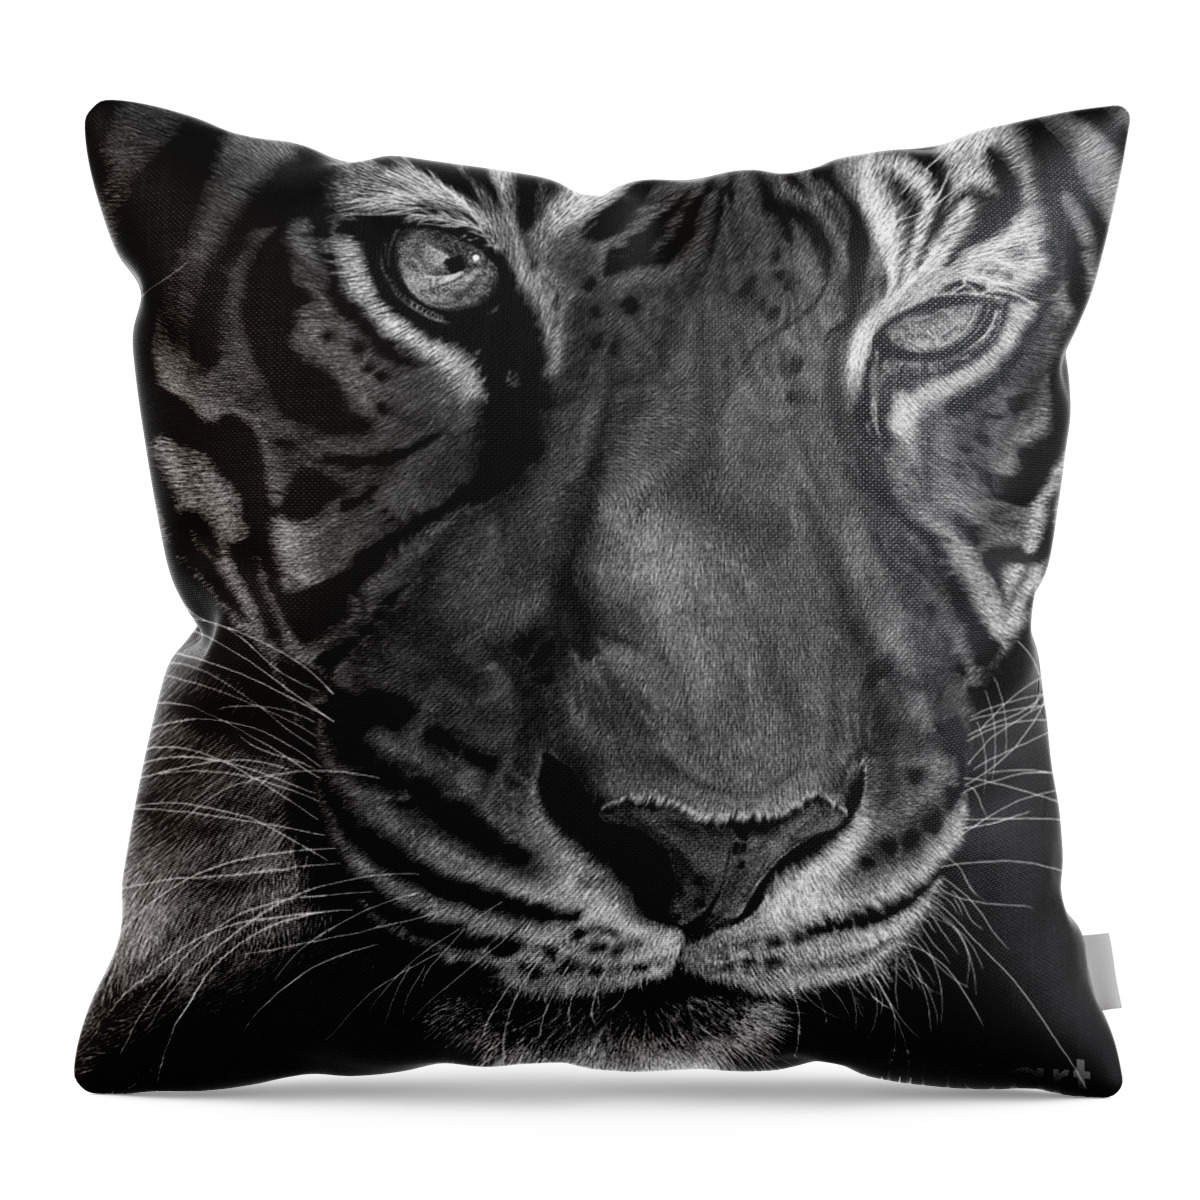 Tiger Throw Pillow featuring the drawing Sumatran Tiger by Sheryl Unwin